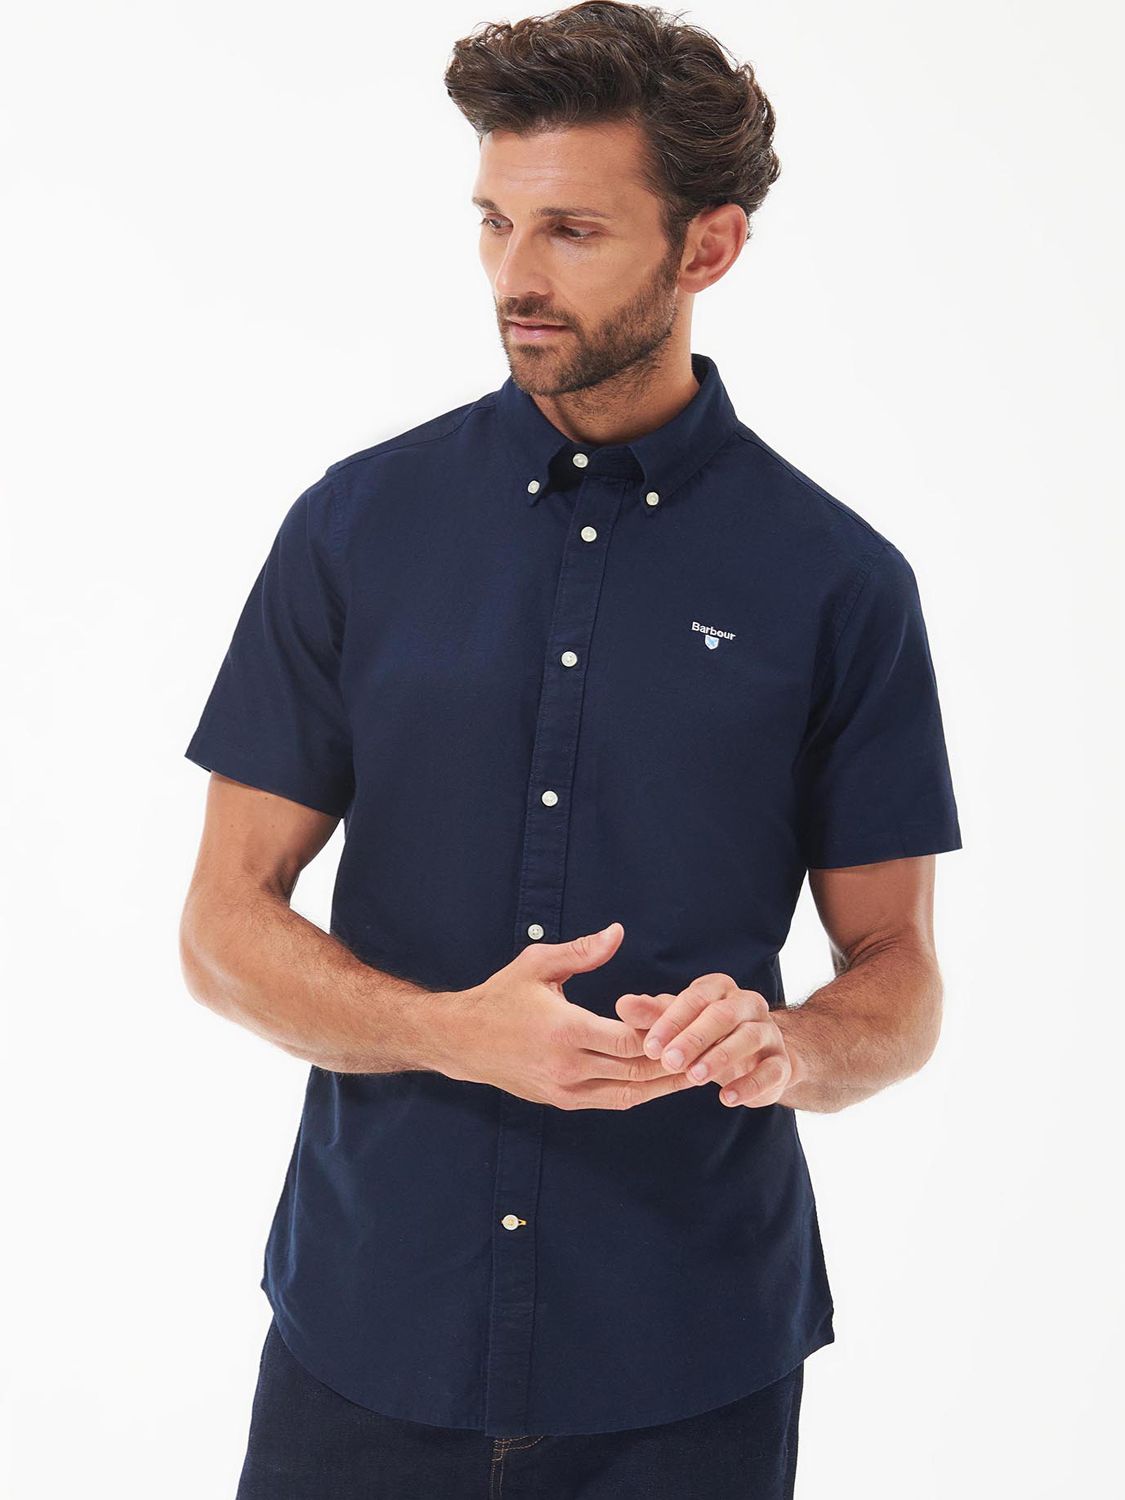 Barbour Oxford Cotton Short Sleeve Shirt, Navy at John Lewis & Partners